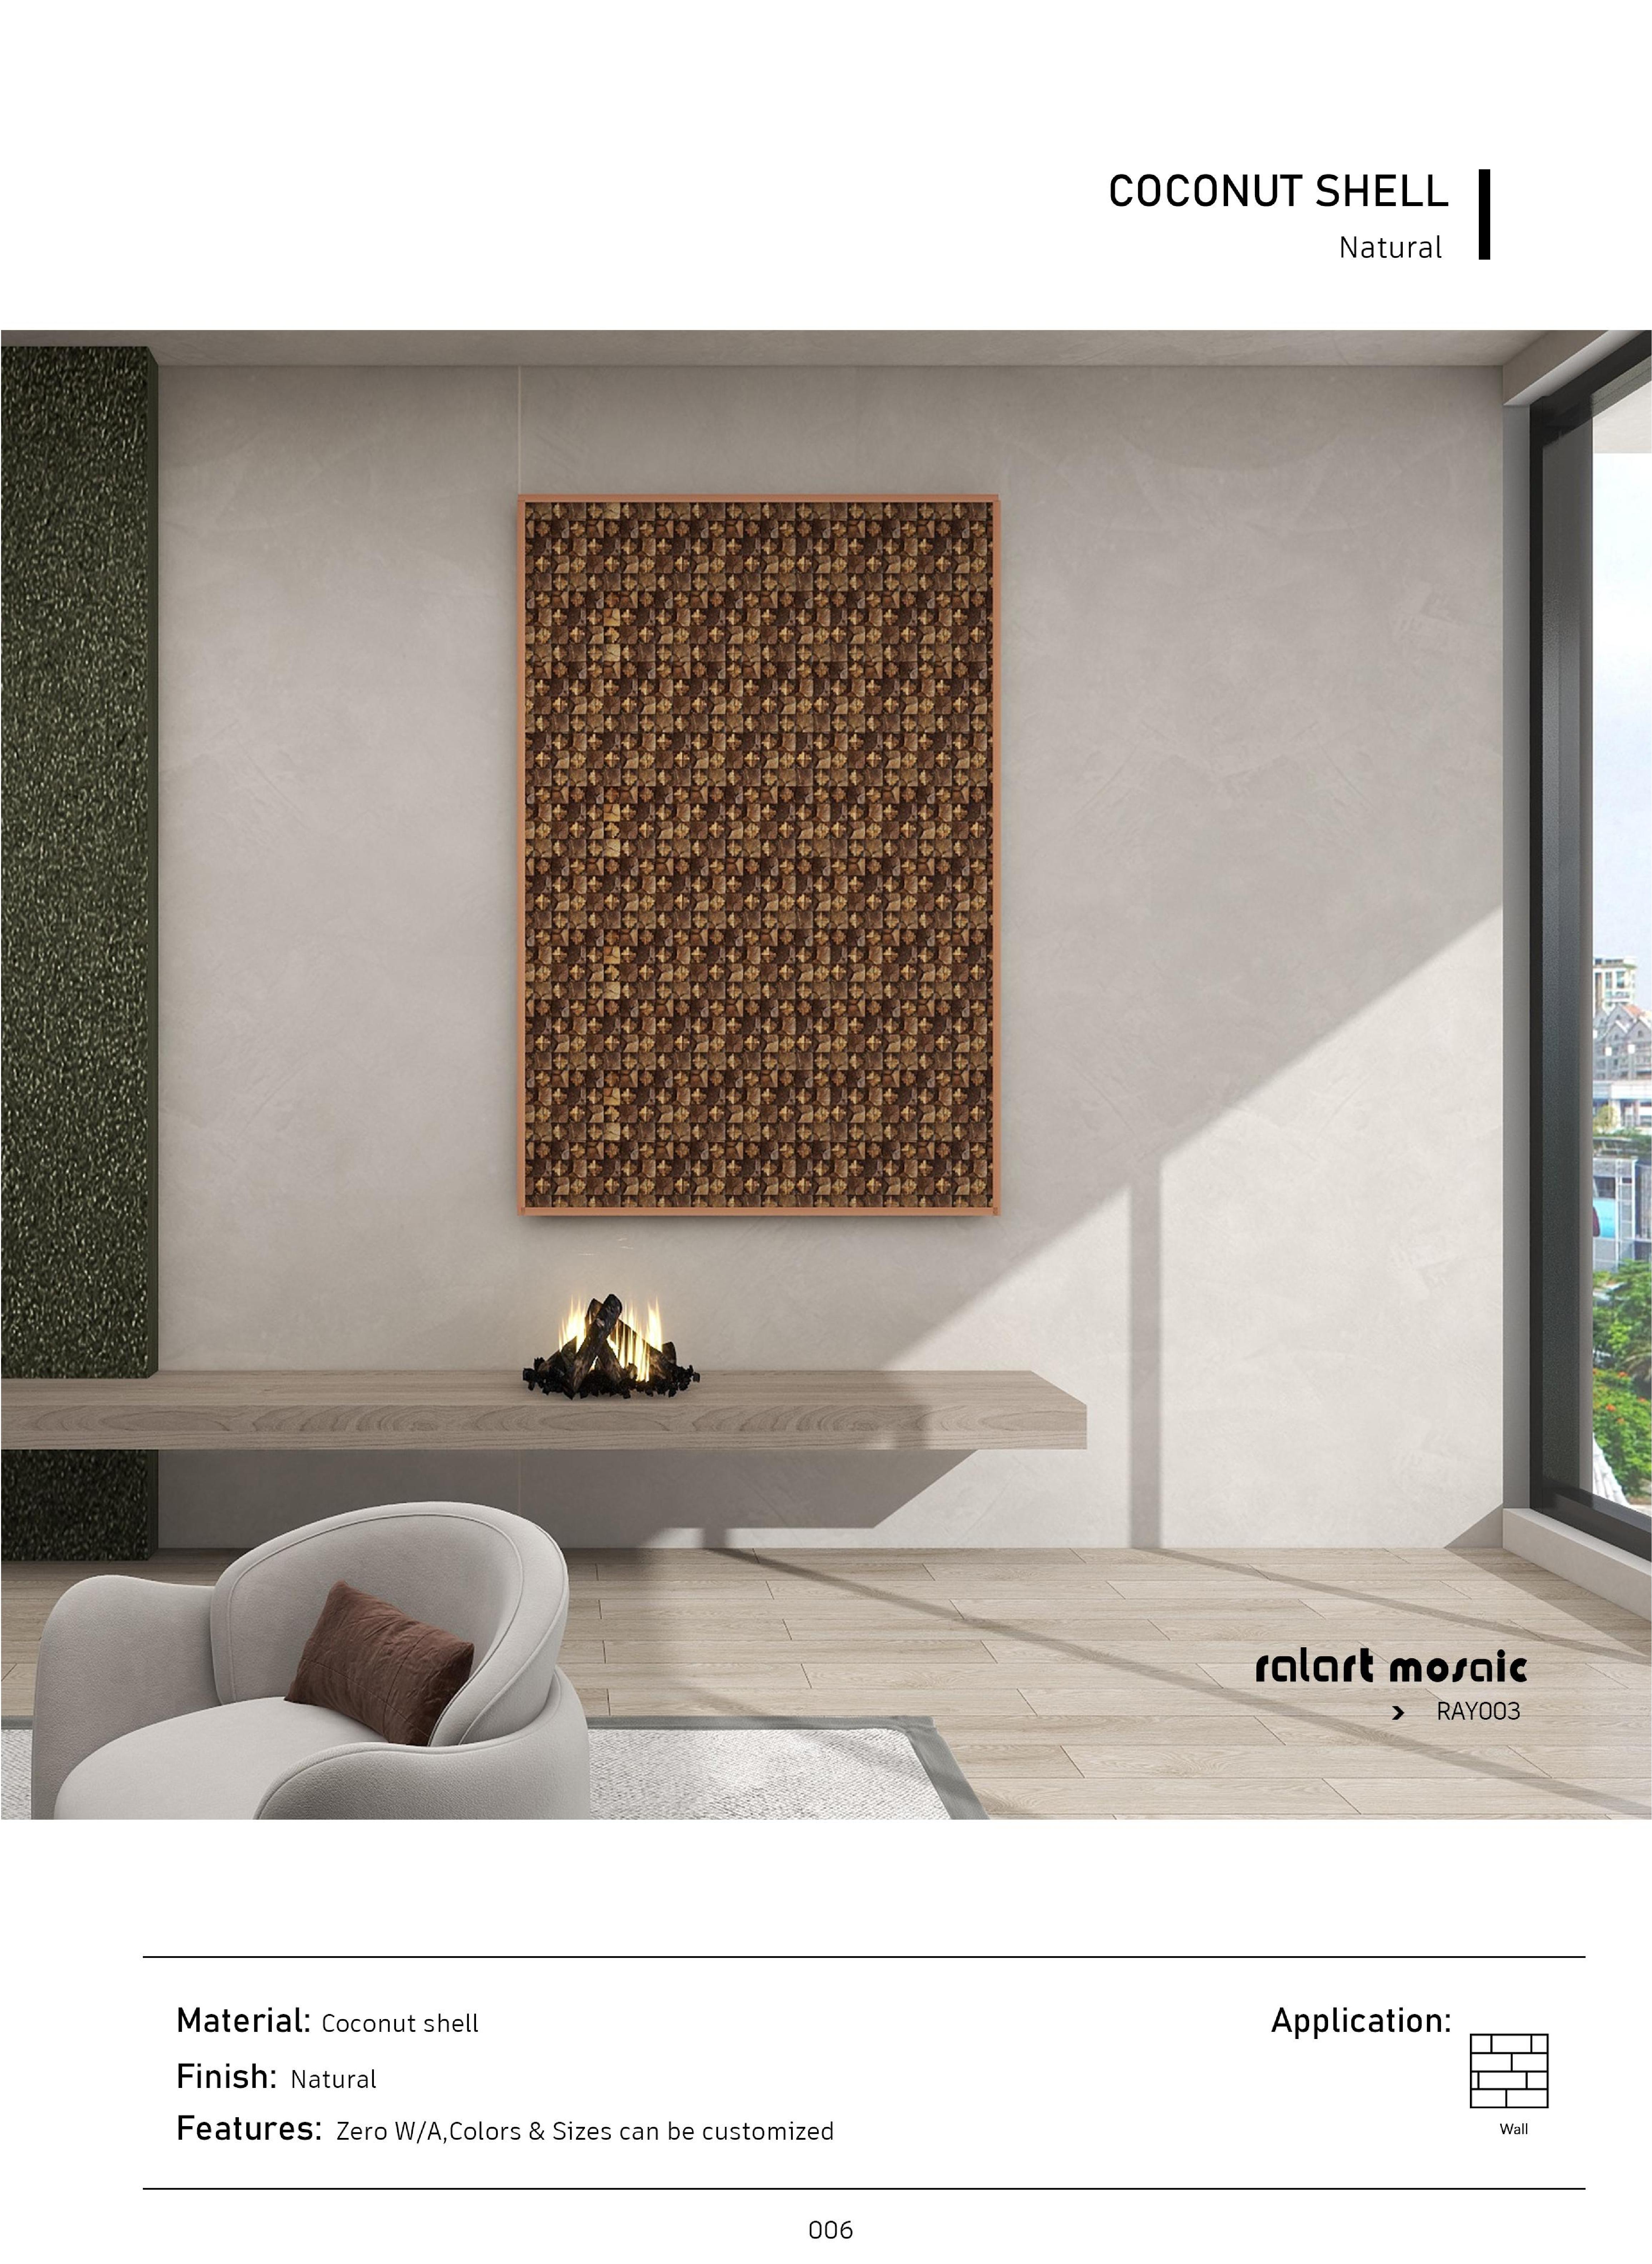 Coconut shell mosaic - Ralart Mosaic_7.jpg